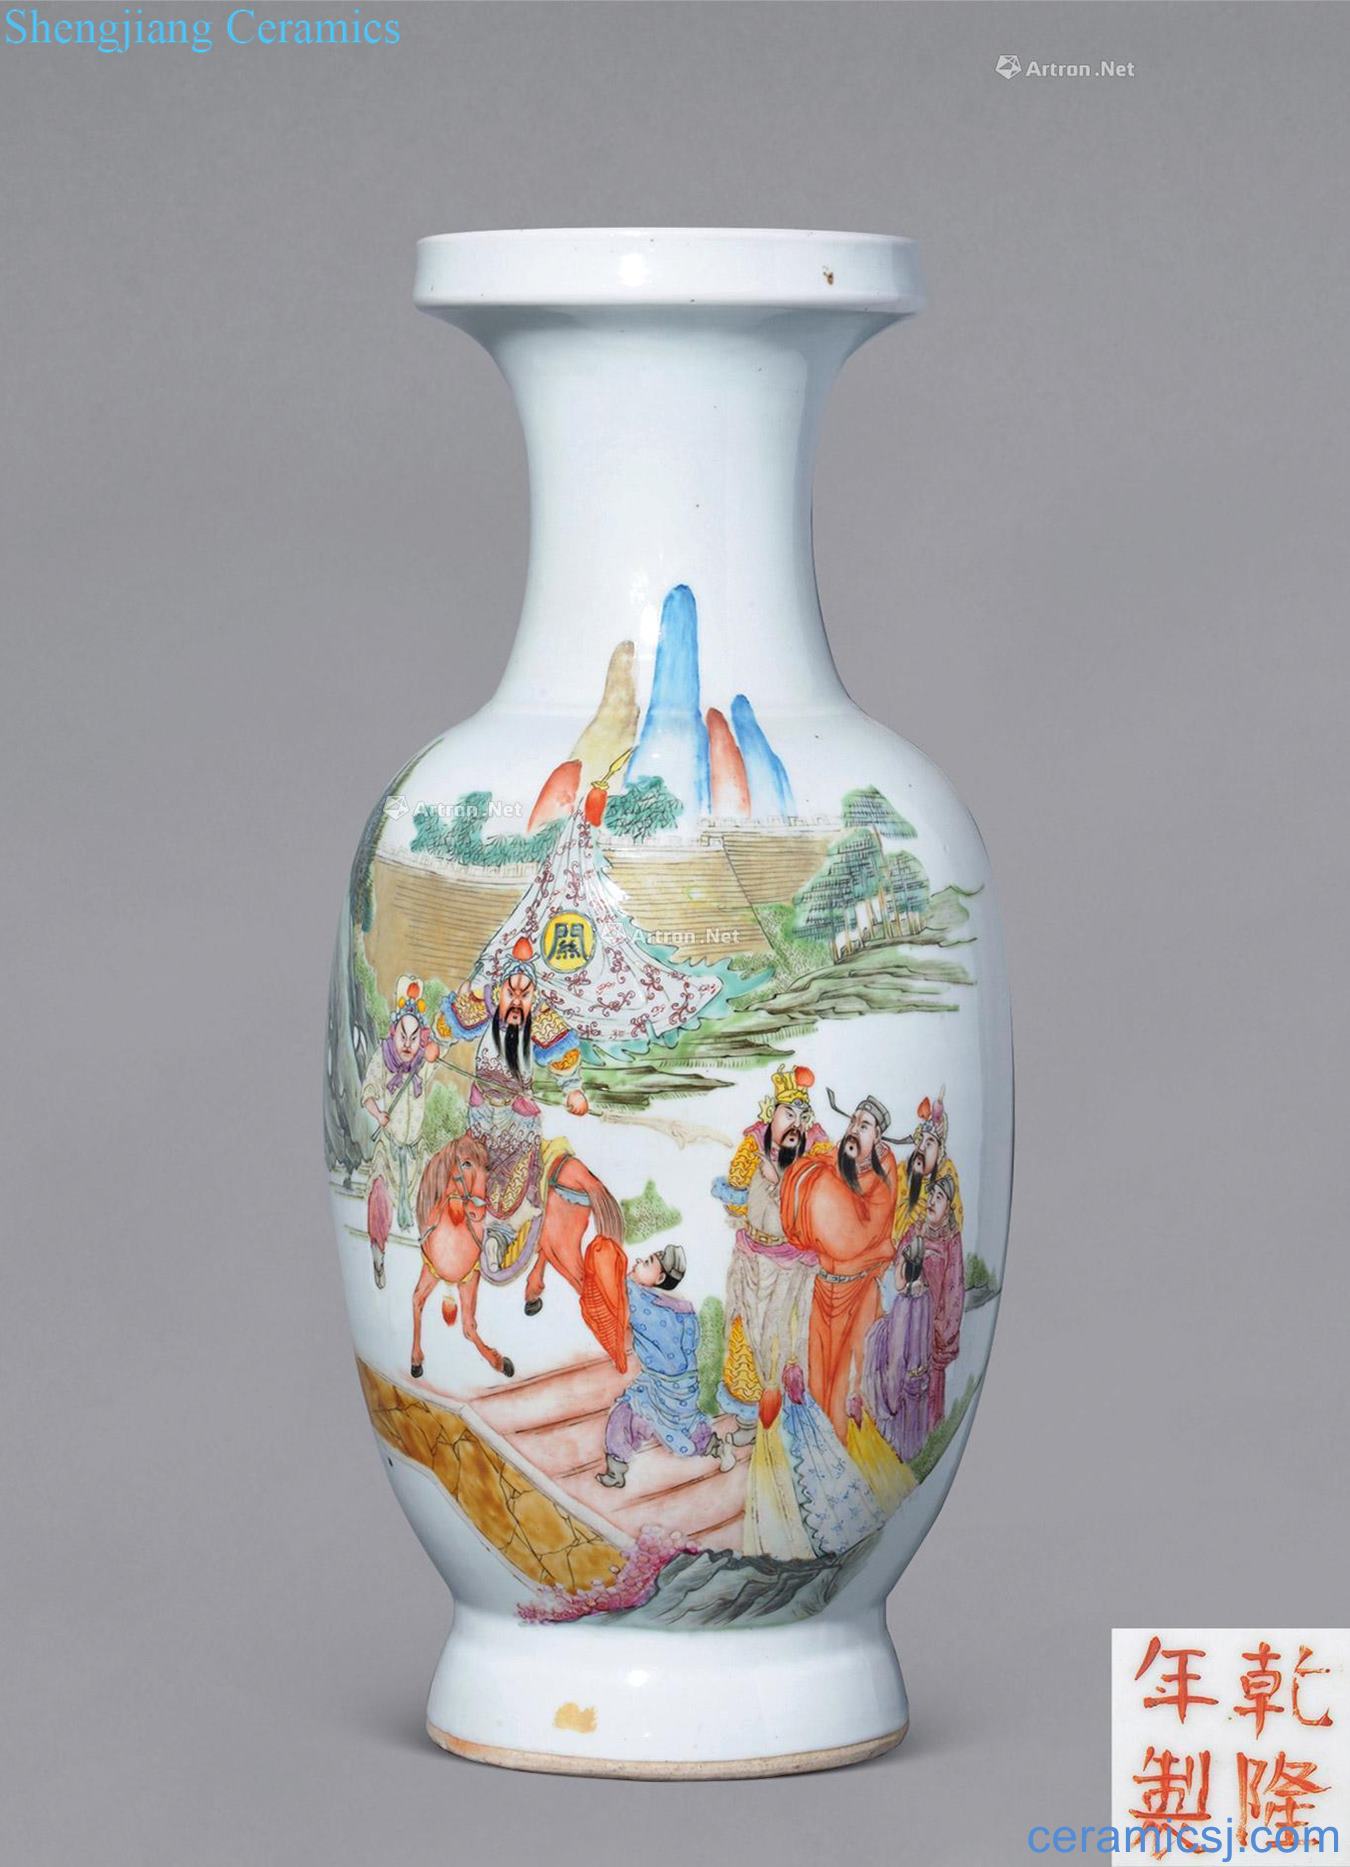 Pastel reign of qing emperor guangxu huarong moral interpretation of cao cao just bottles